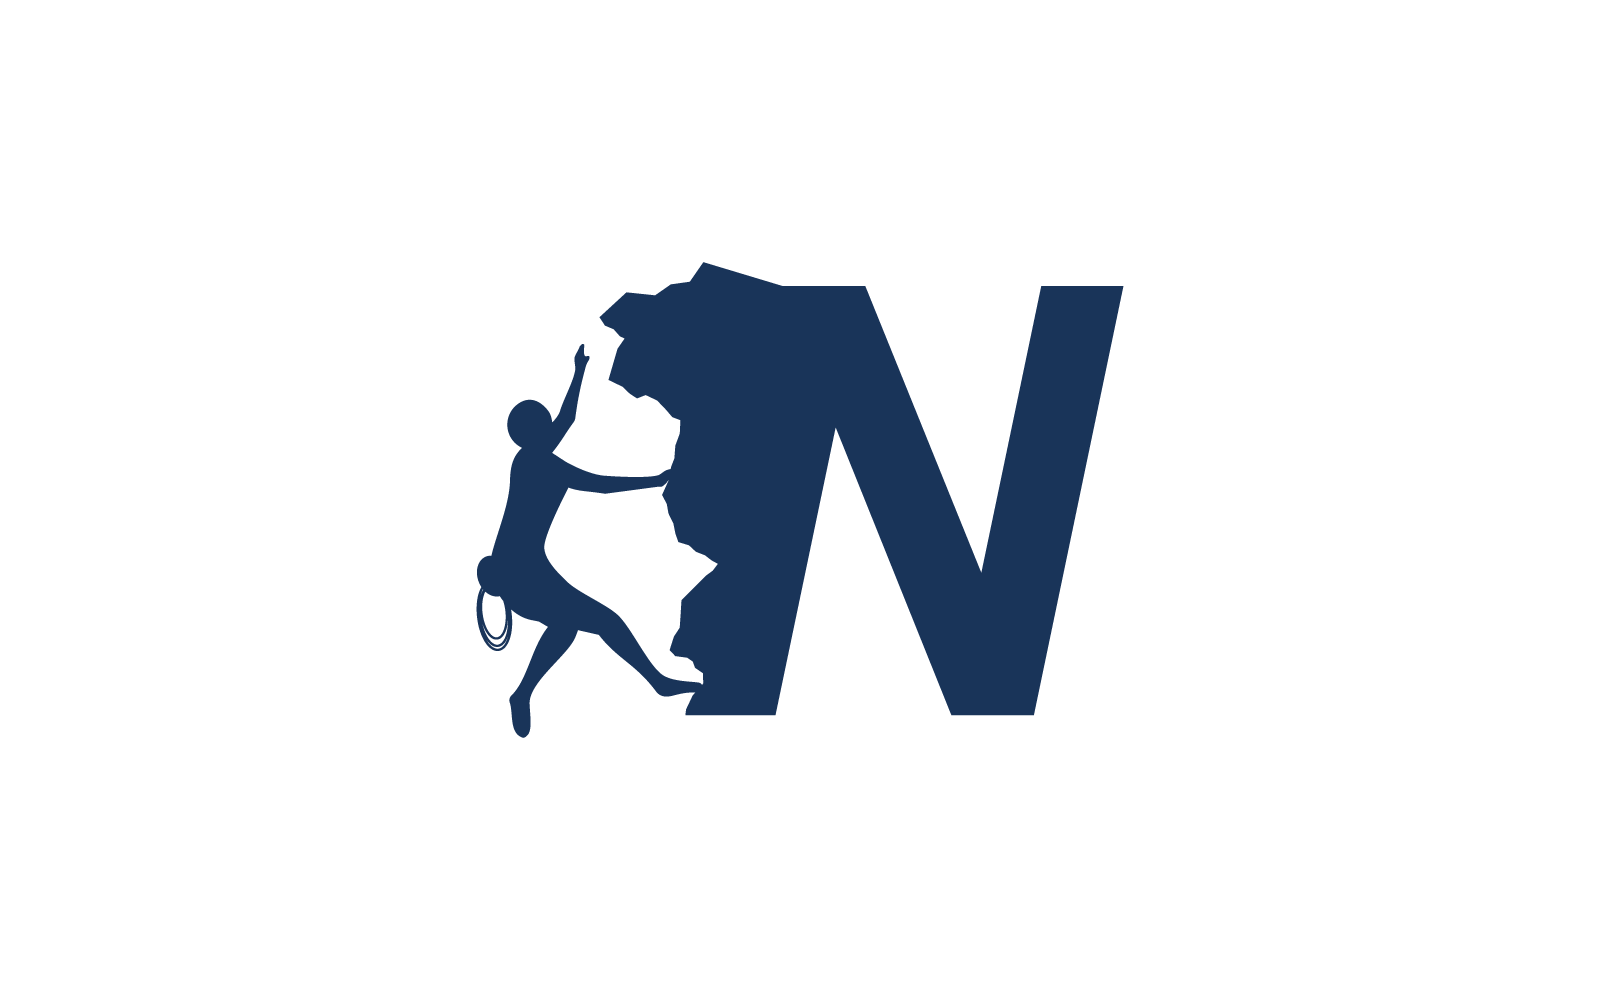 Rock climber logo with alphabet vector illustration design Logo Template